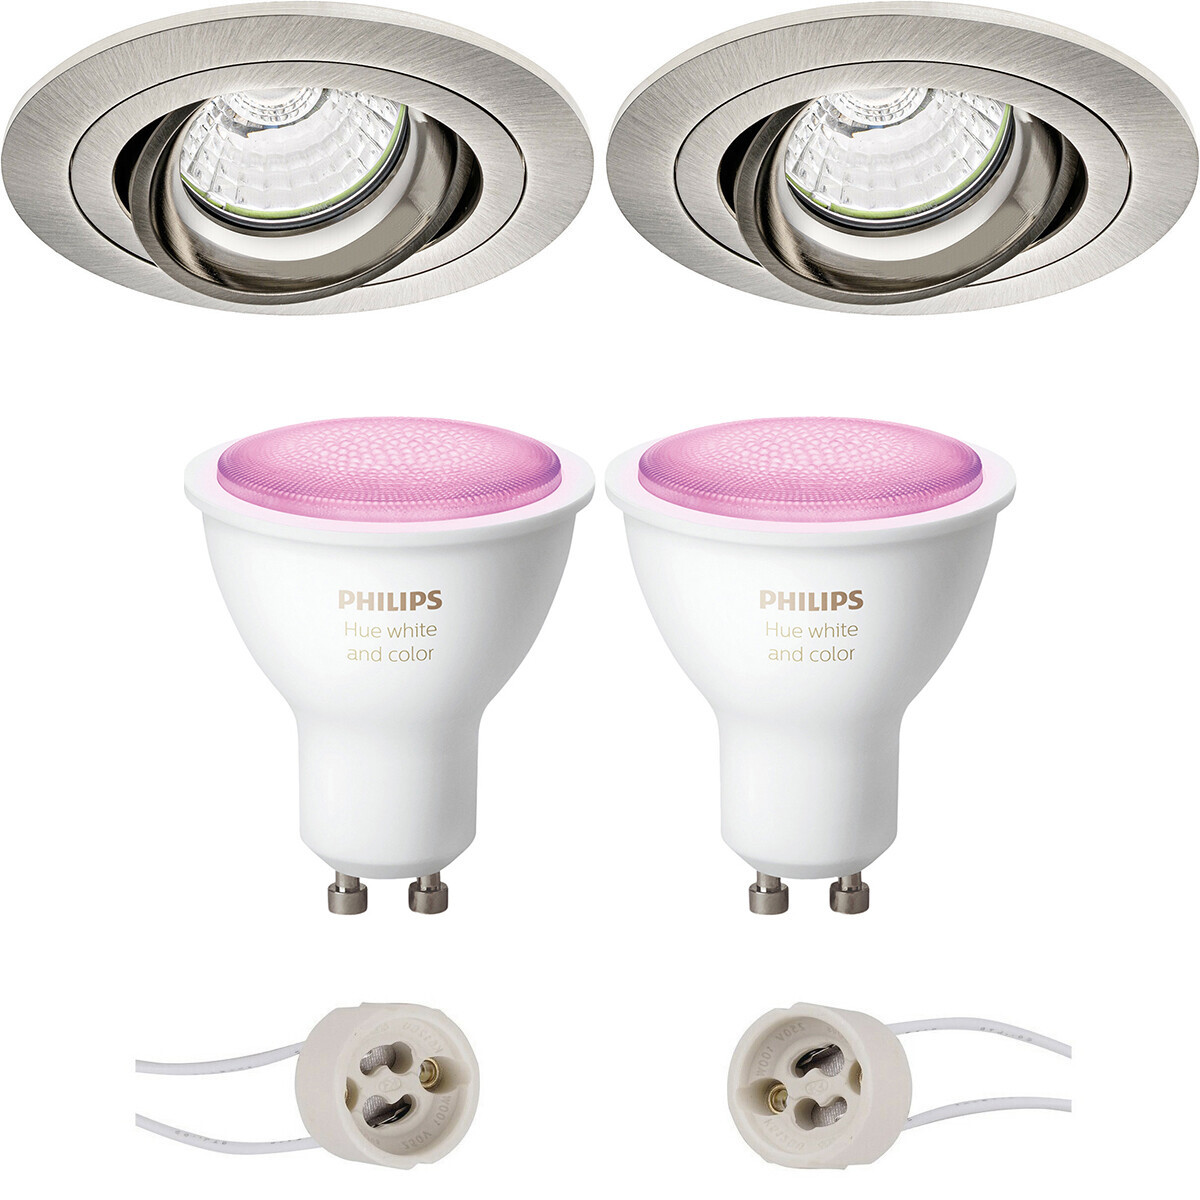 Pragmi Alpin Pro - Inbouw Rond - Mat Nikkel - Kantelbaar - Ø92mm - Philips Hue - LED Spot Set GU10 - White and Color Ambiance - Bluetooth